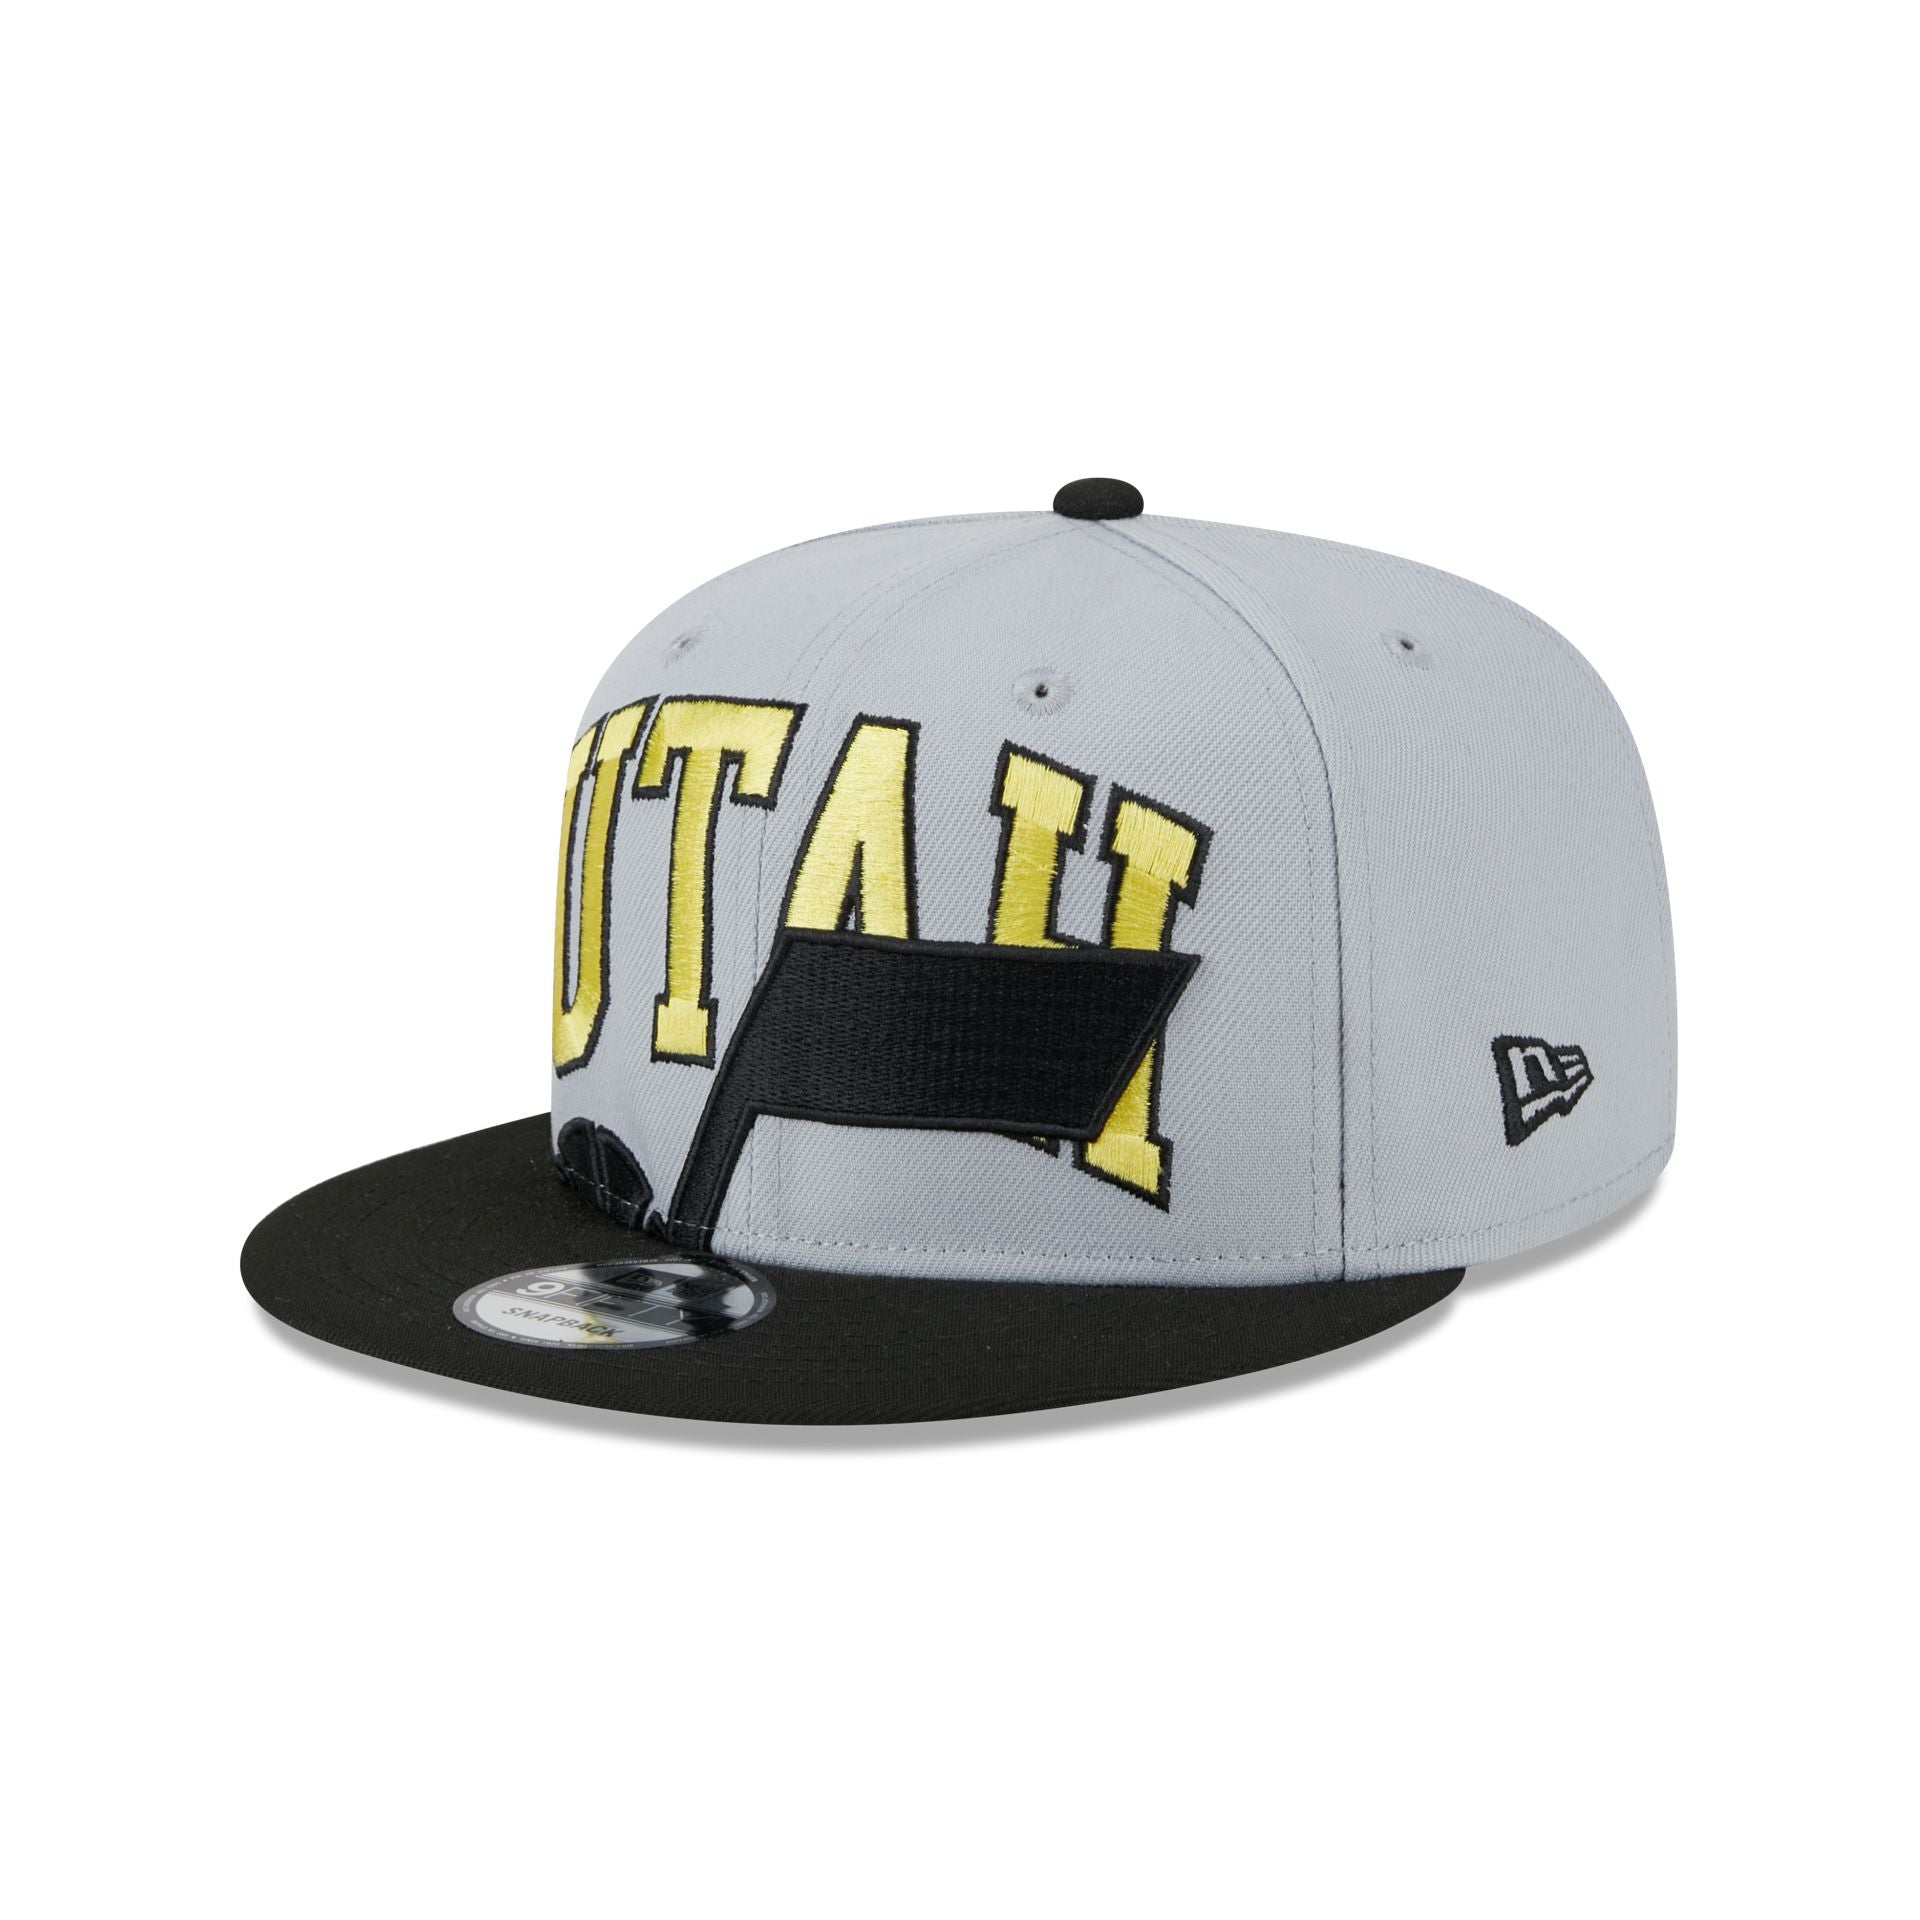 New Era NBA City Series Edition Utah Jazz Snapback 9Fifty Hats